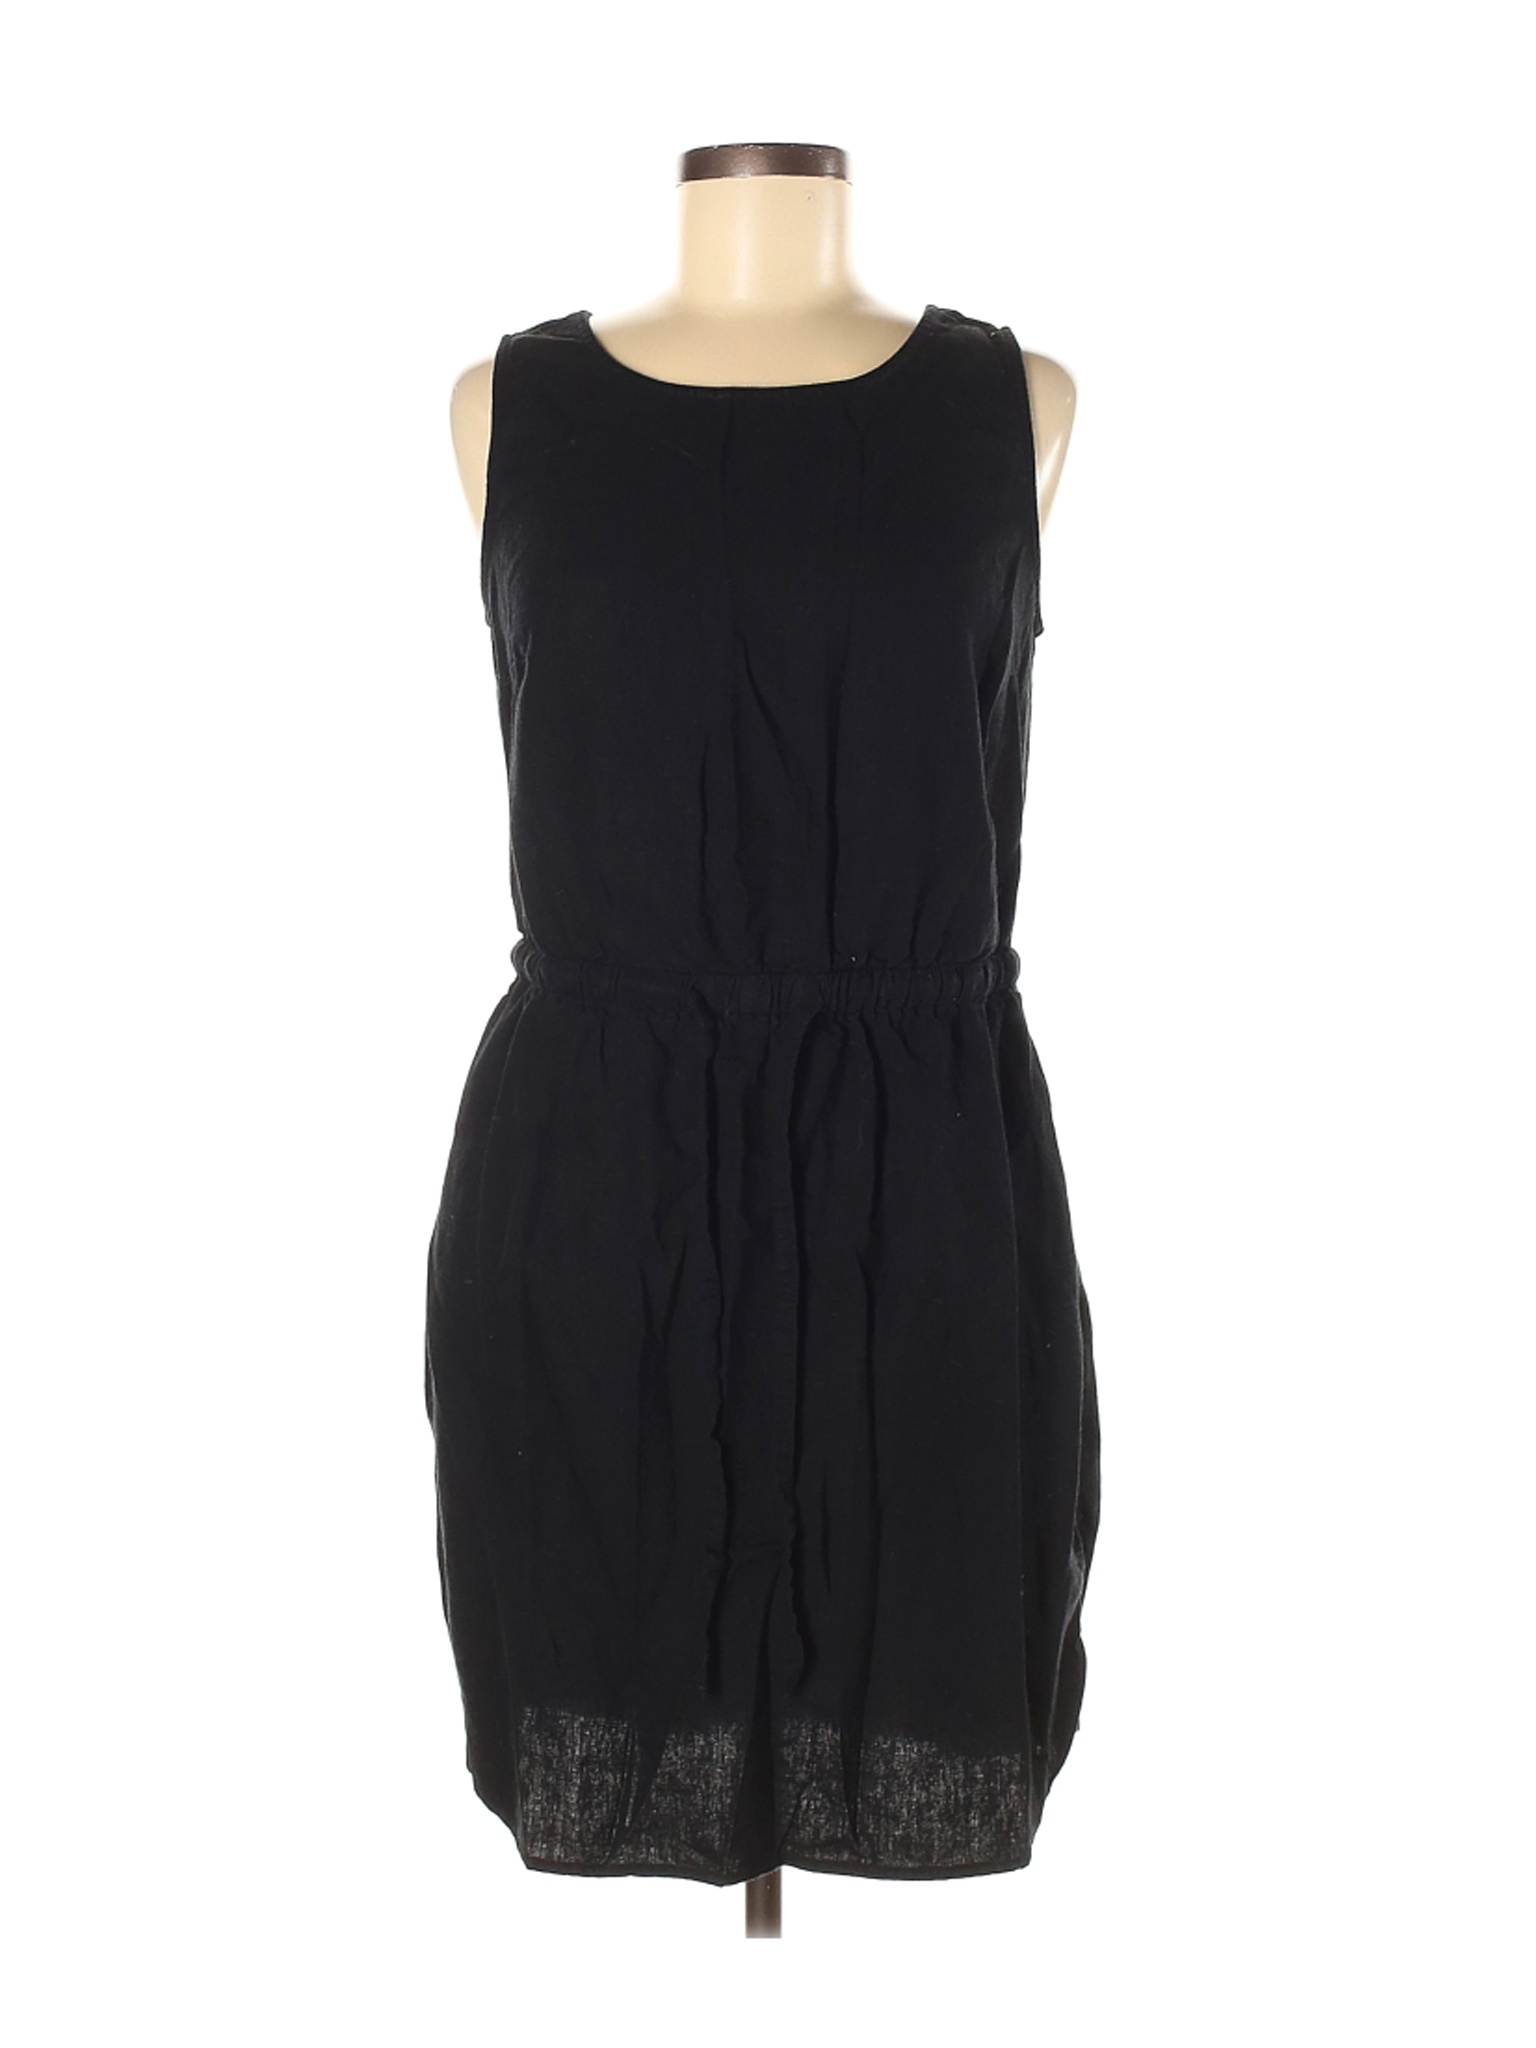 Old Navy Women Black Casual Dress M | eBay